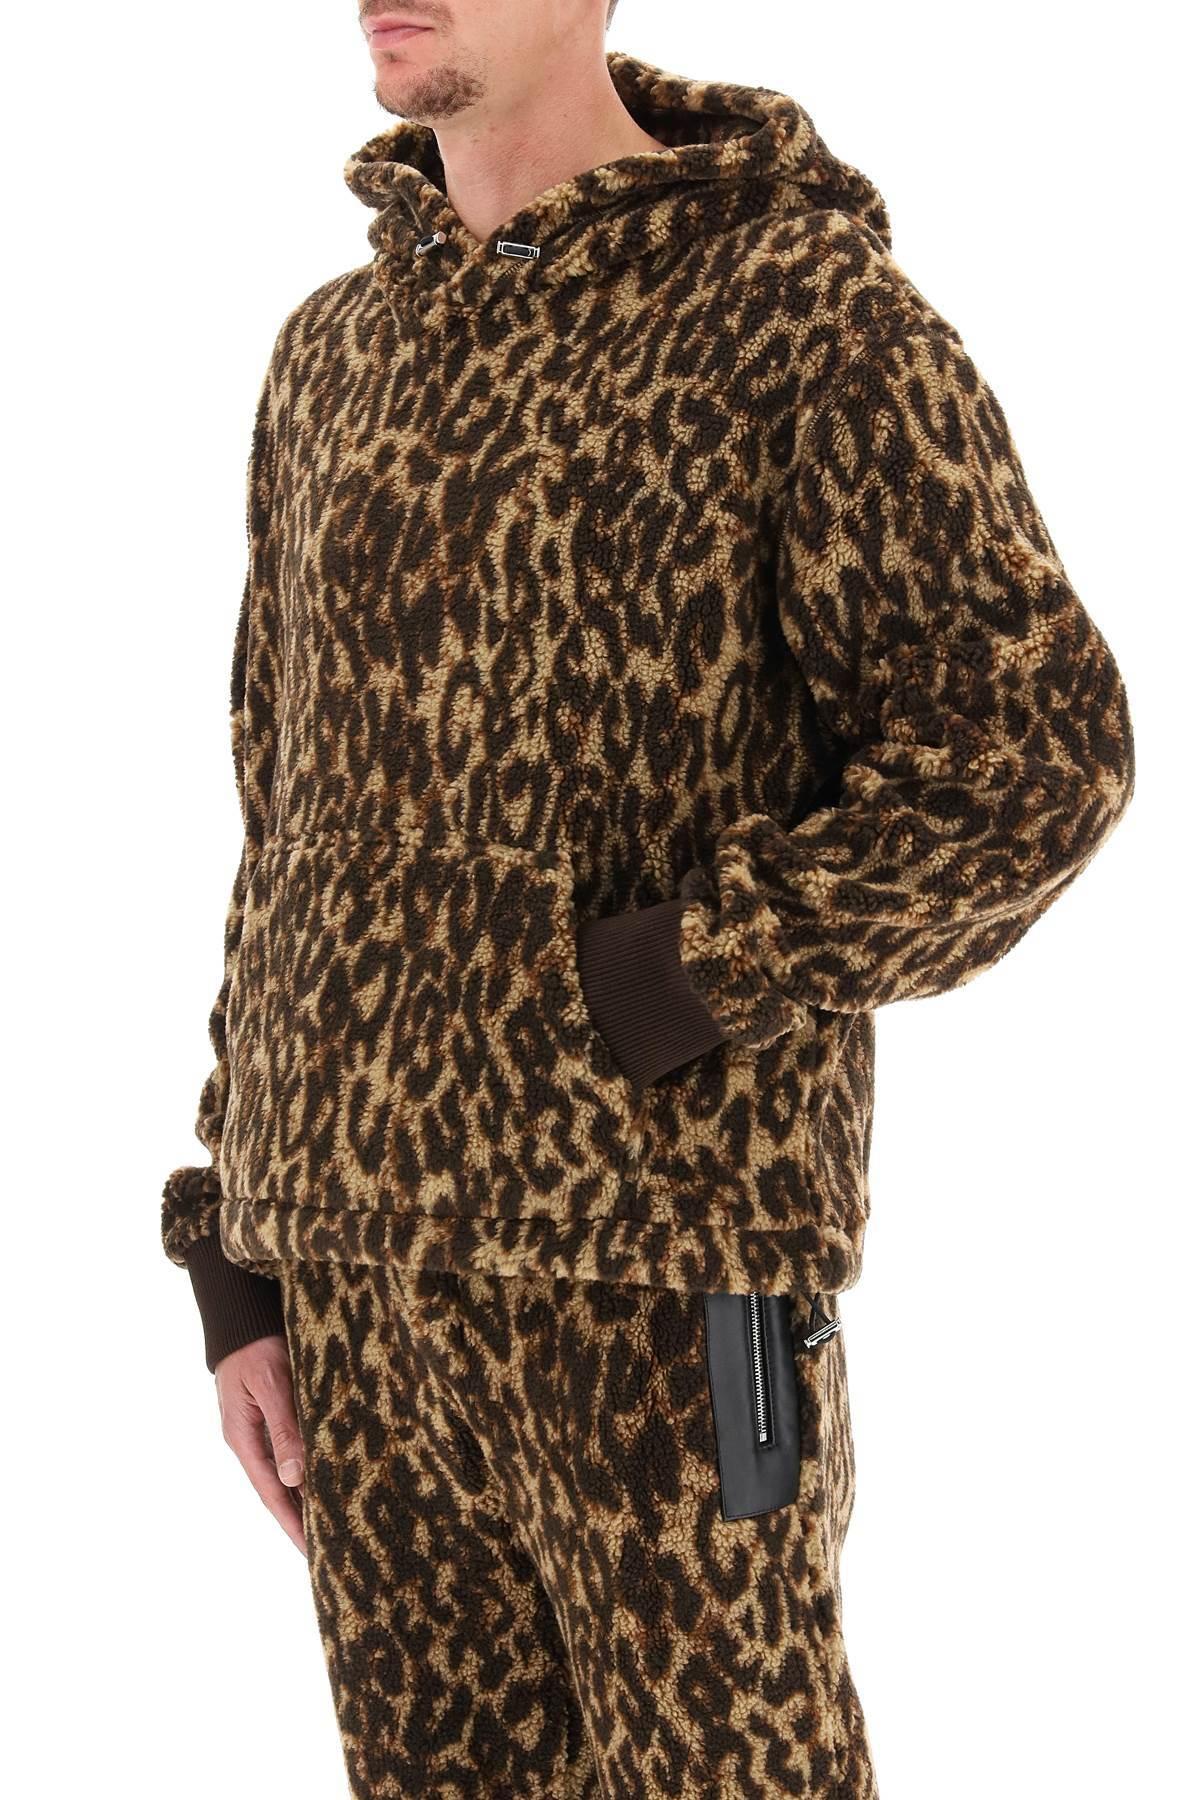 Amiri Leopard-print Polar Fleece Hoodie in Brown for Men | Lyst